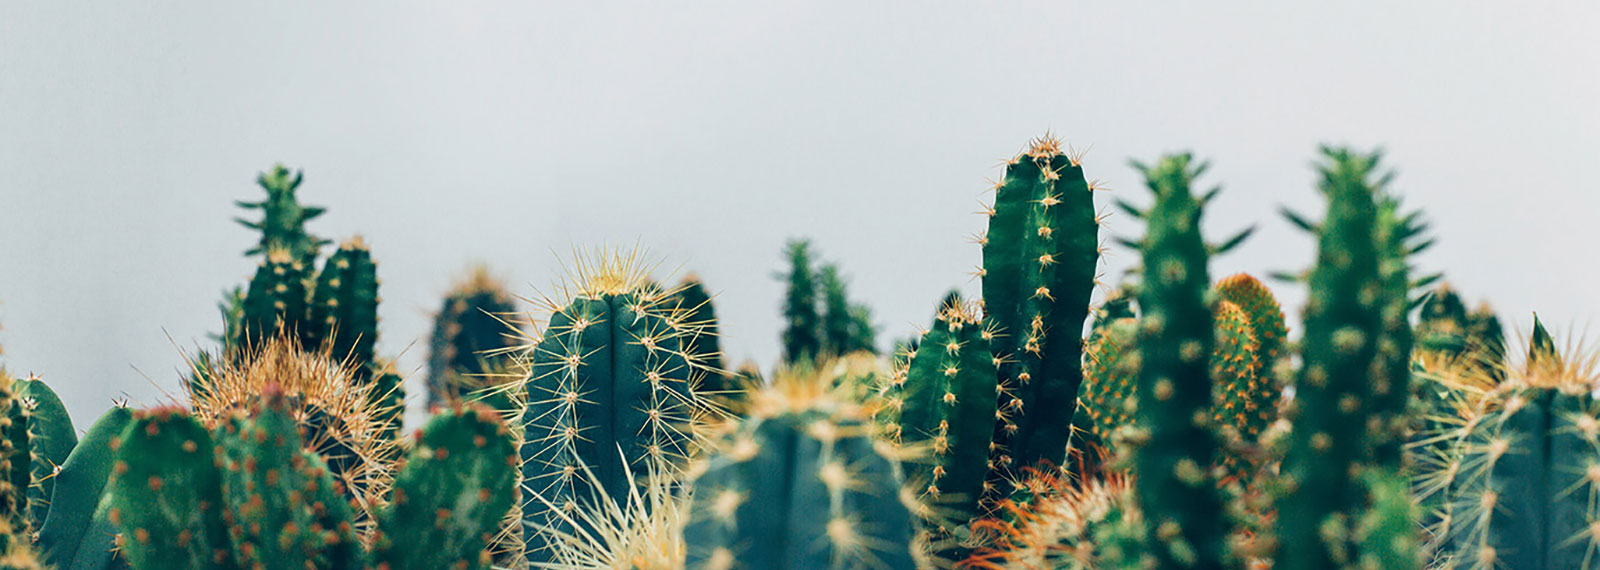 Cactus artificiales